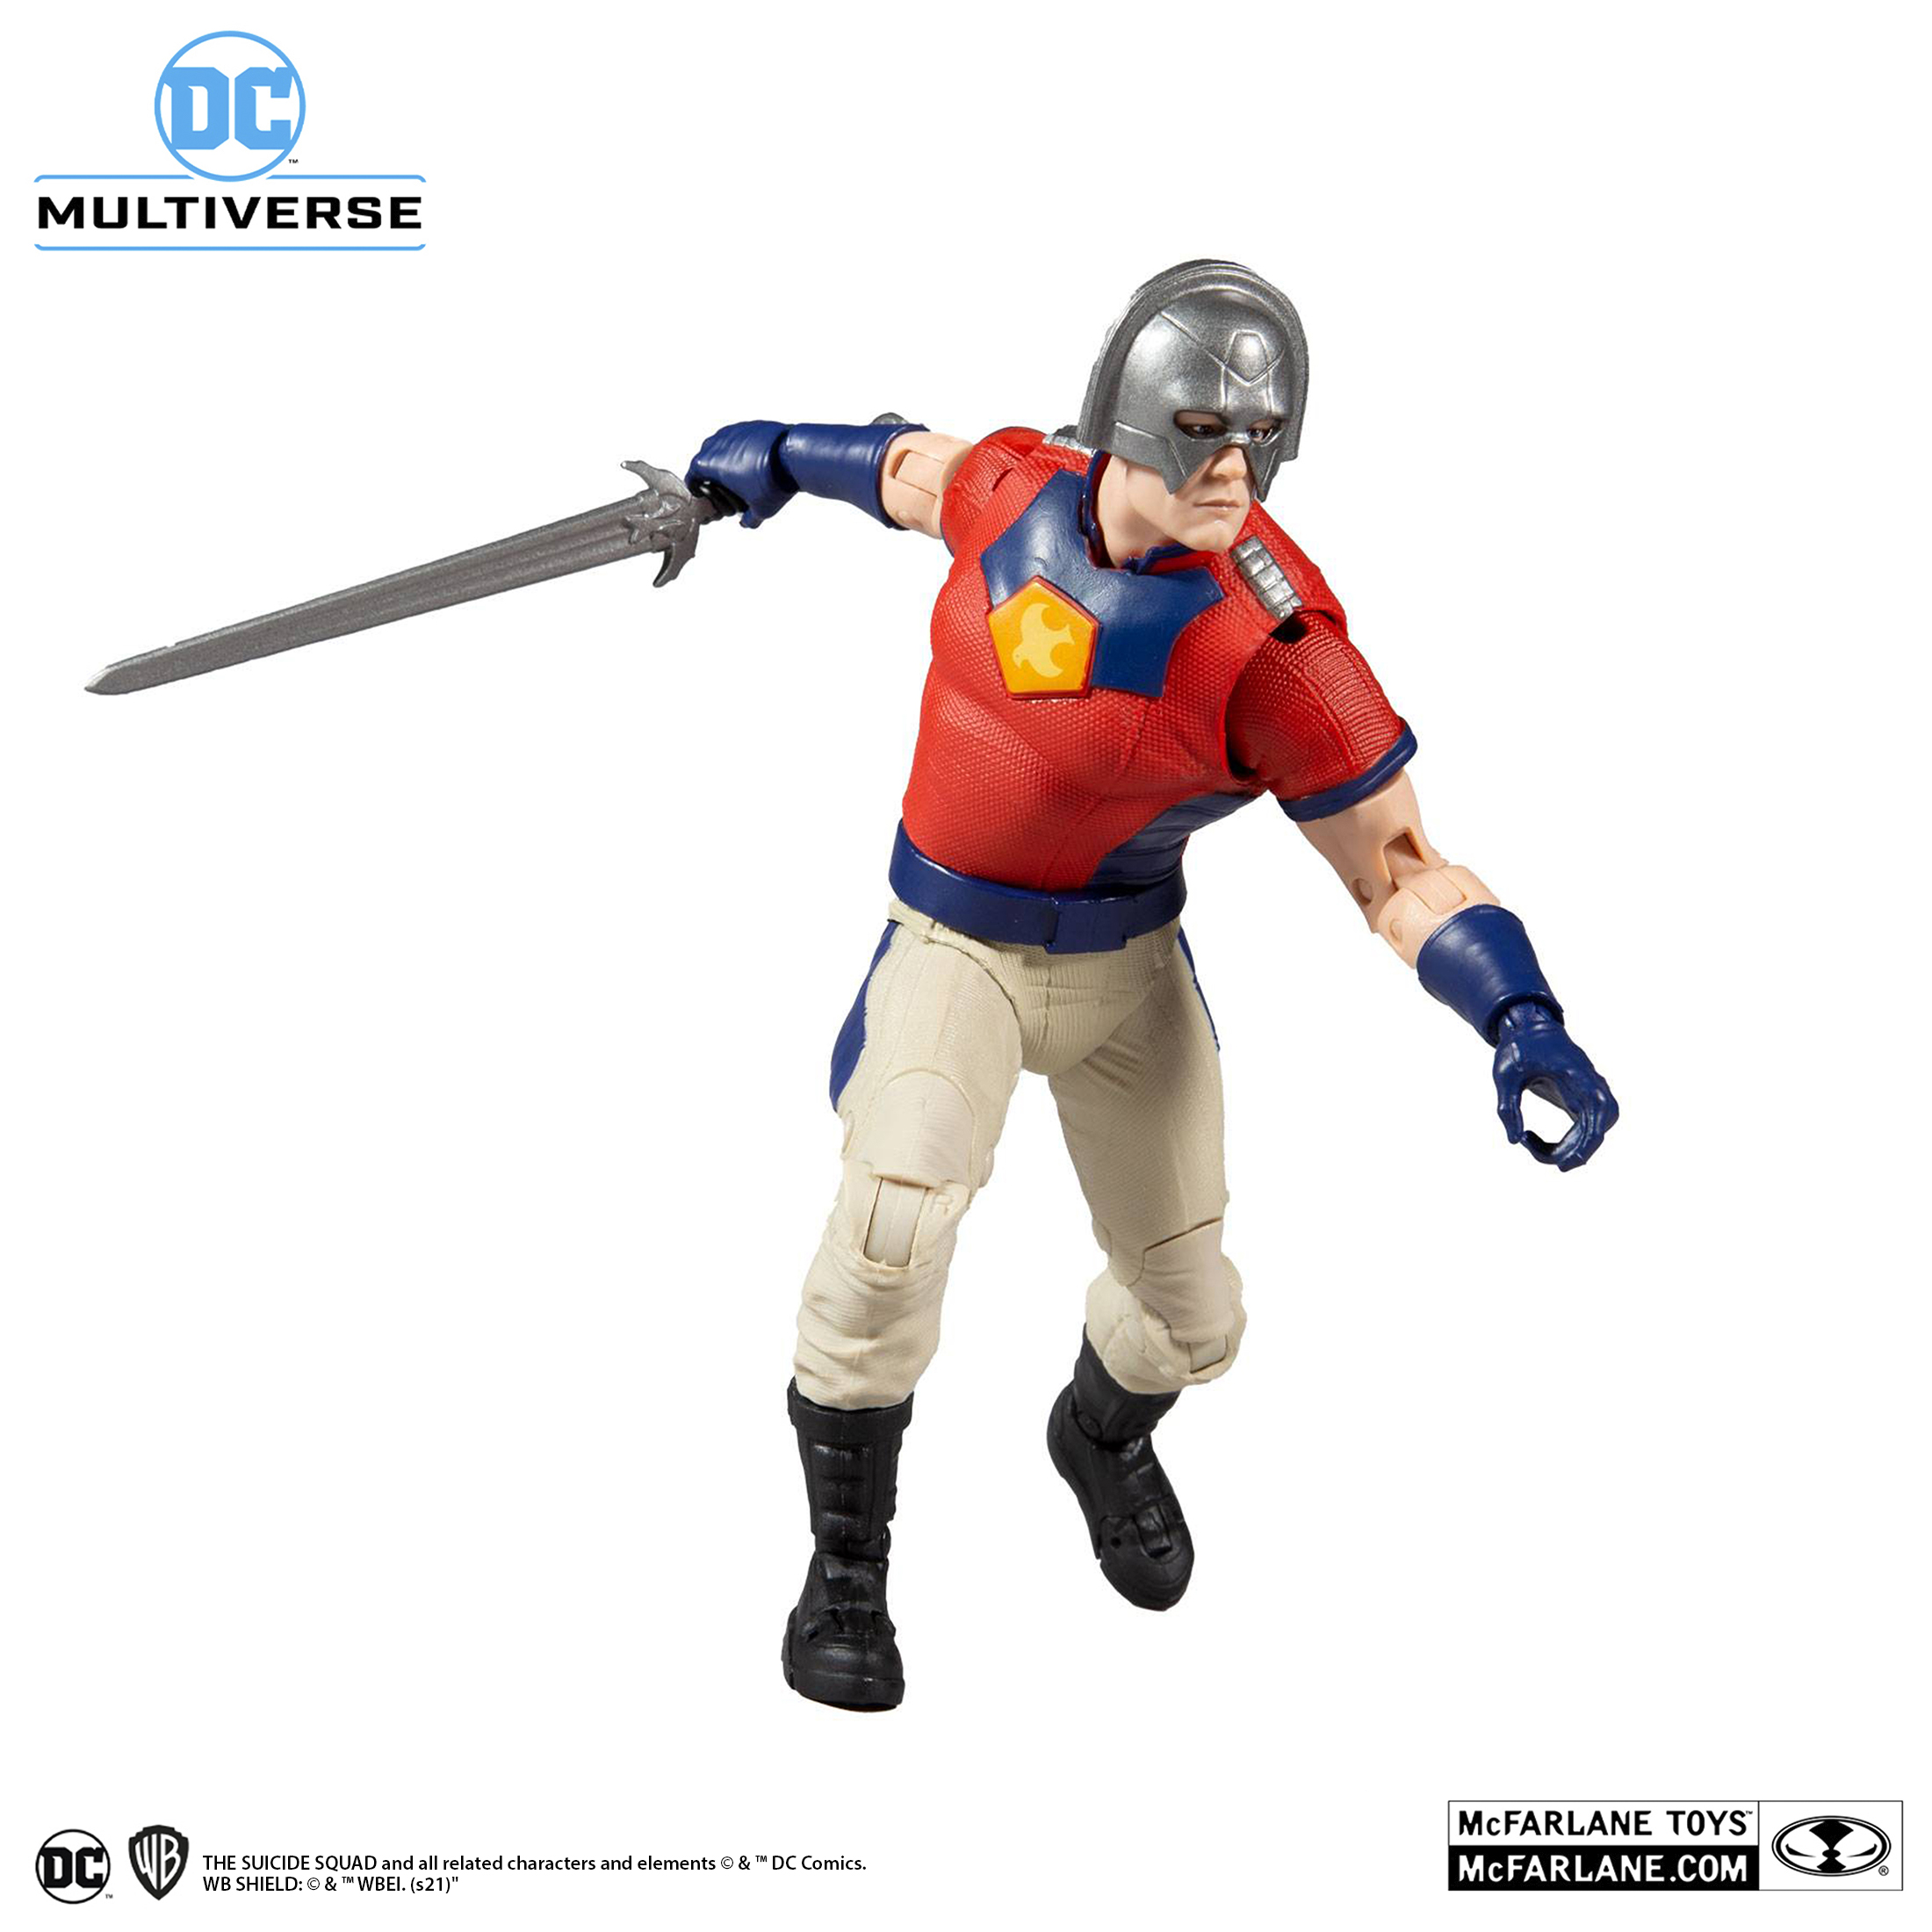 McFarlane Toys DC Multiverse - The Suicide Squad 2 Movie Figures